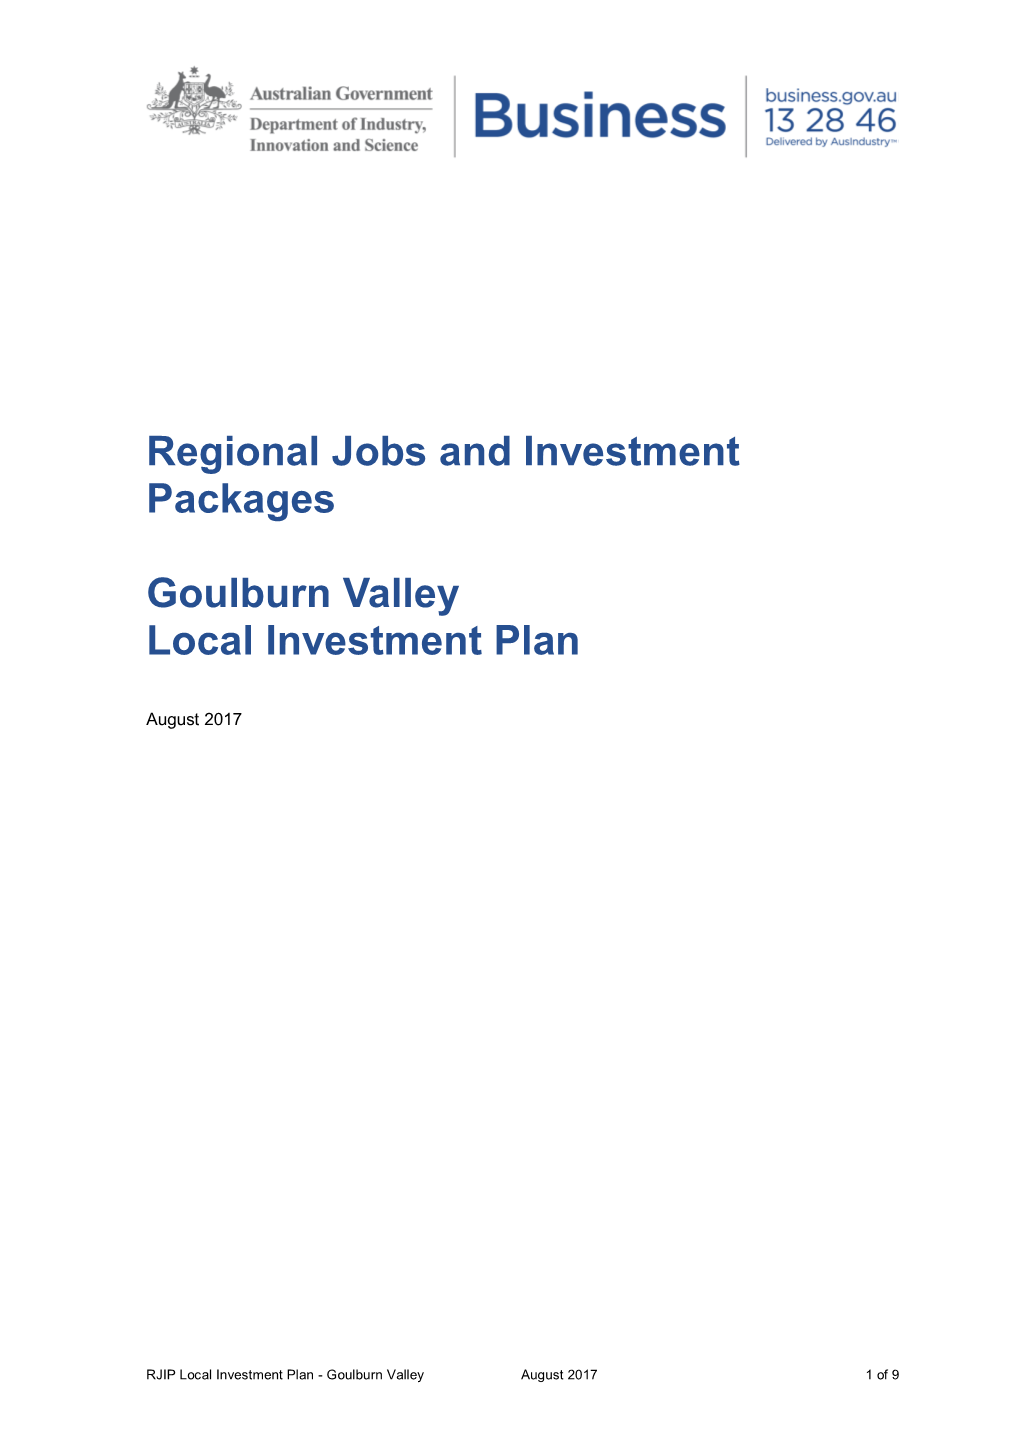 Goulburn Valley Local Investment Plan